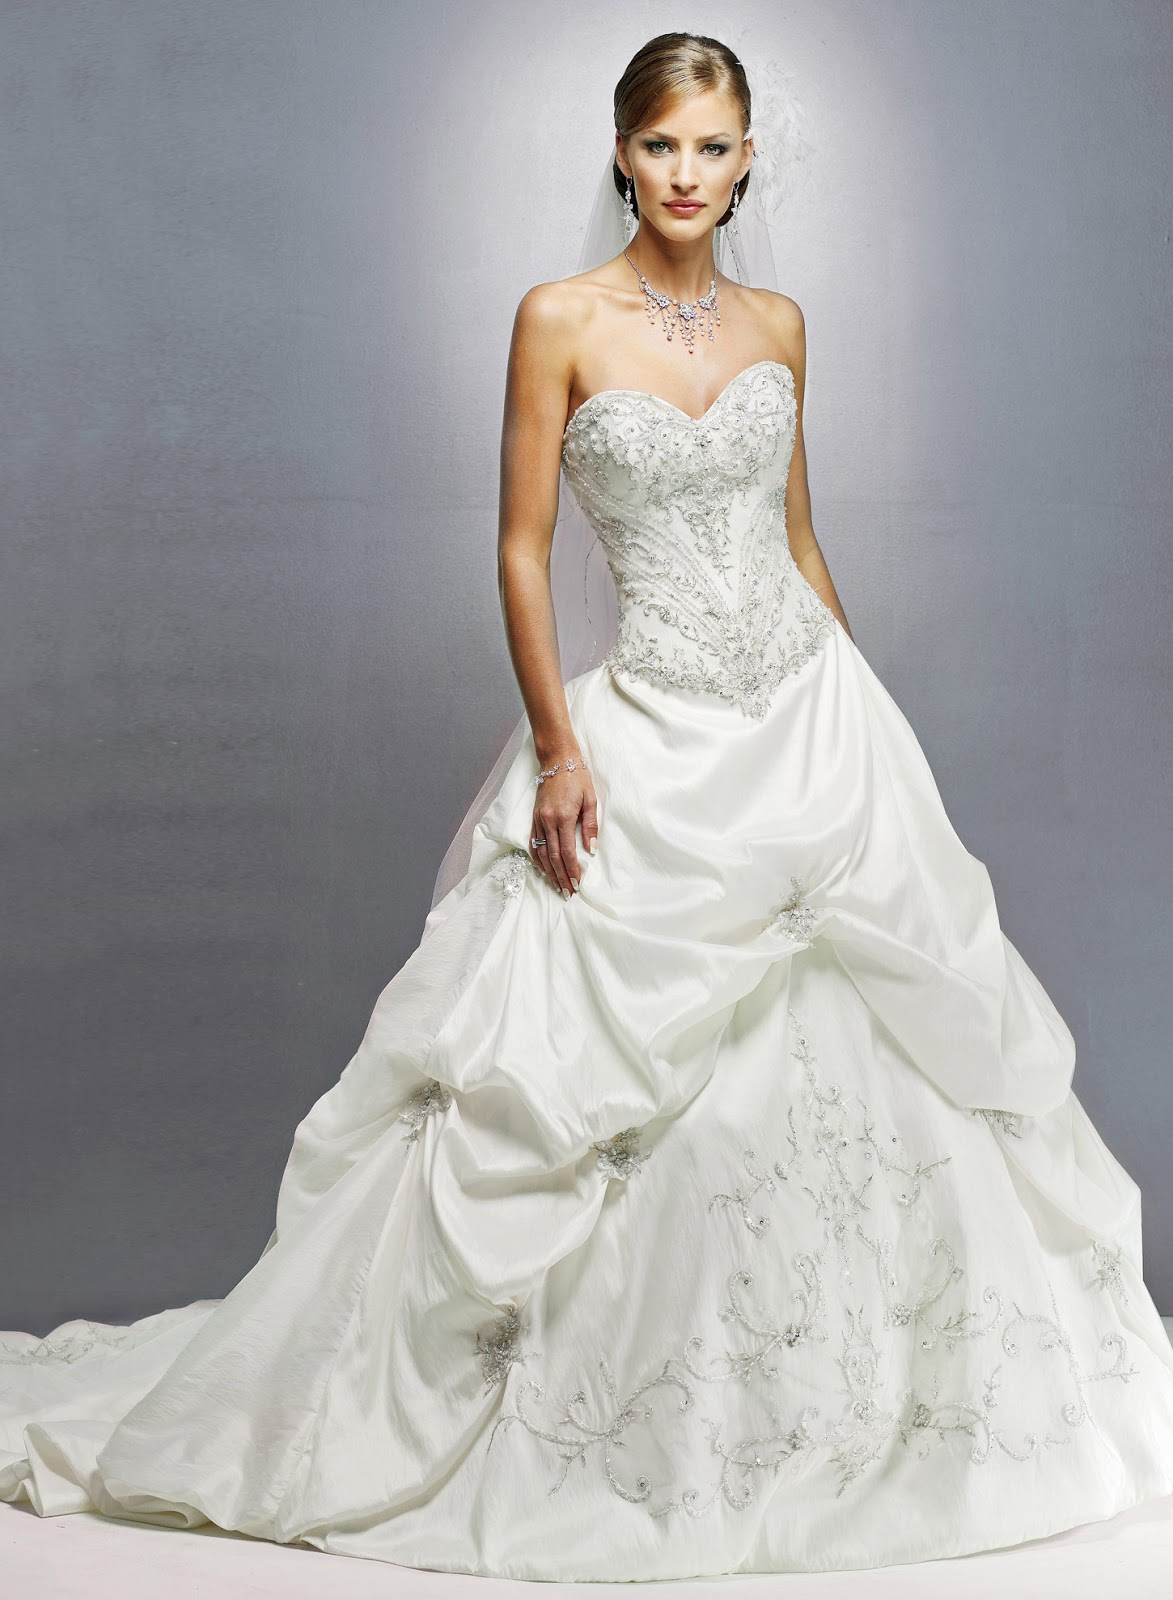 Wedding dresses 2013 online: Find Low-priced Wedding Dresses 2013